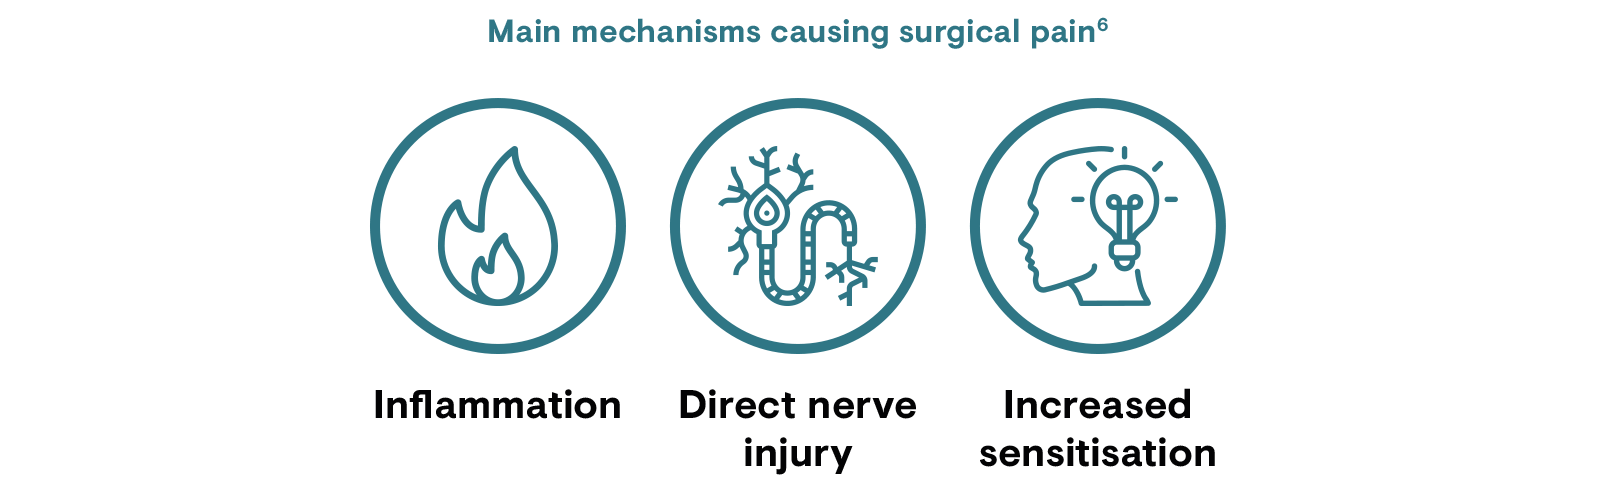 Main mechanisms causing surgical pain